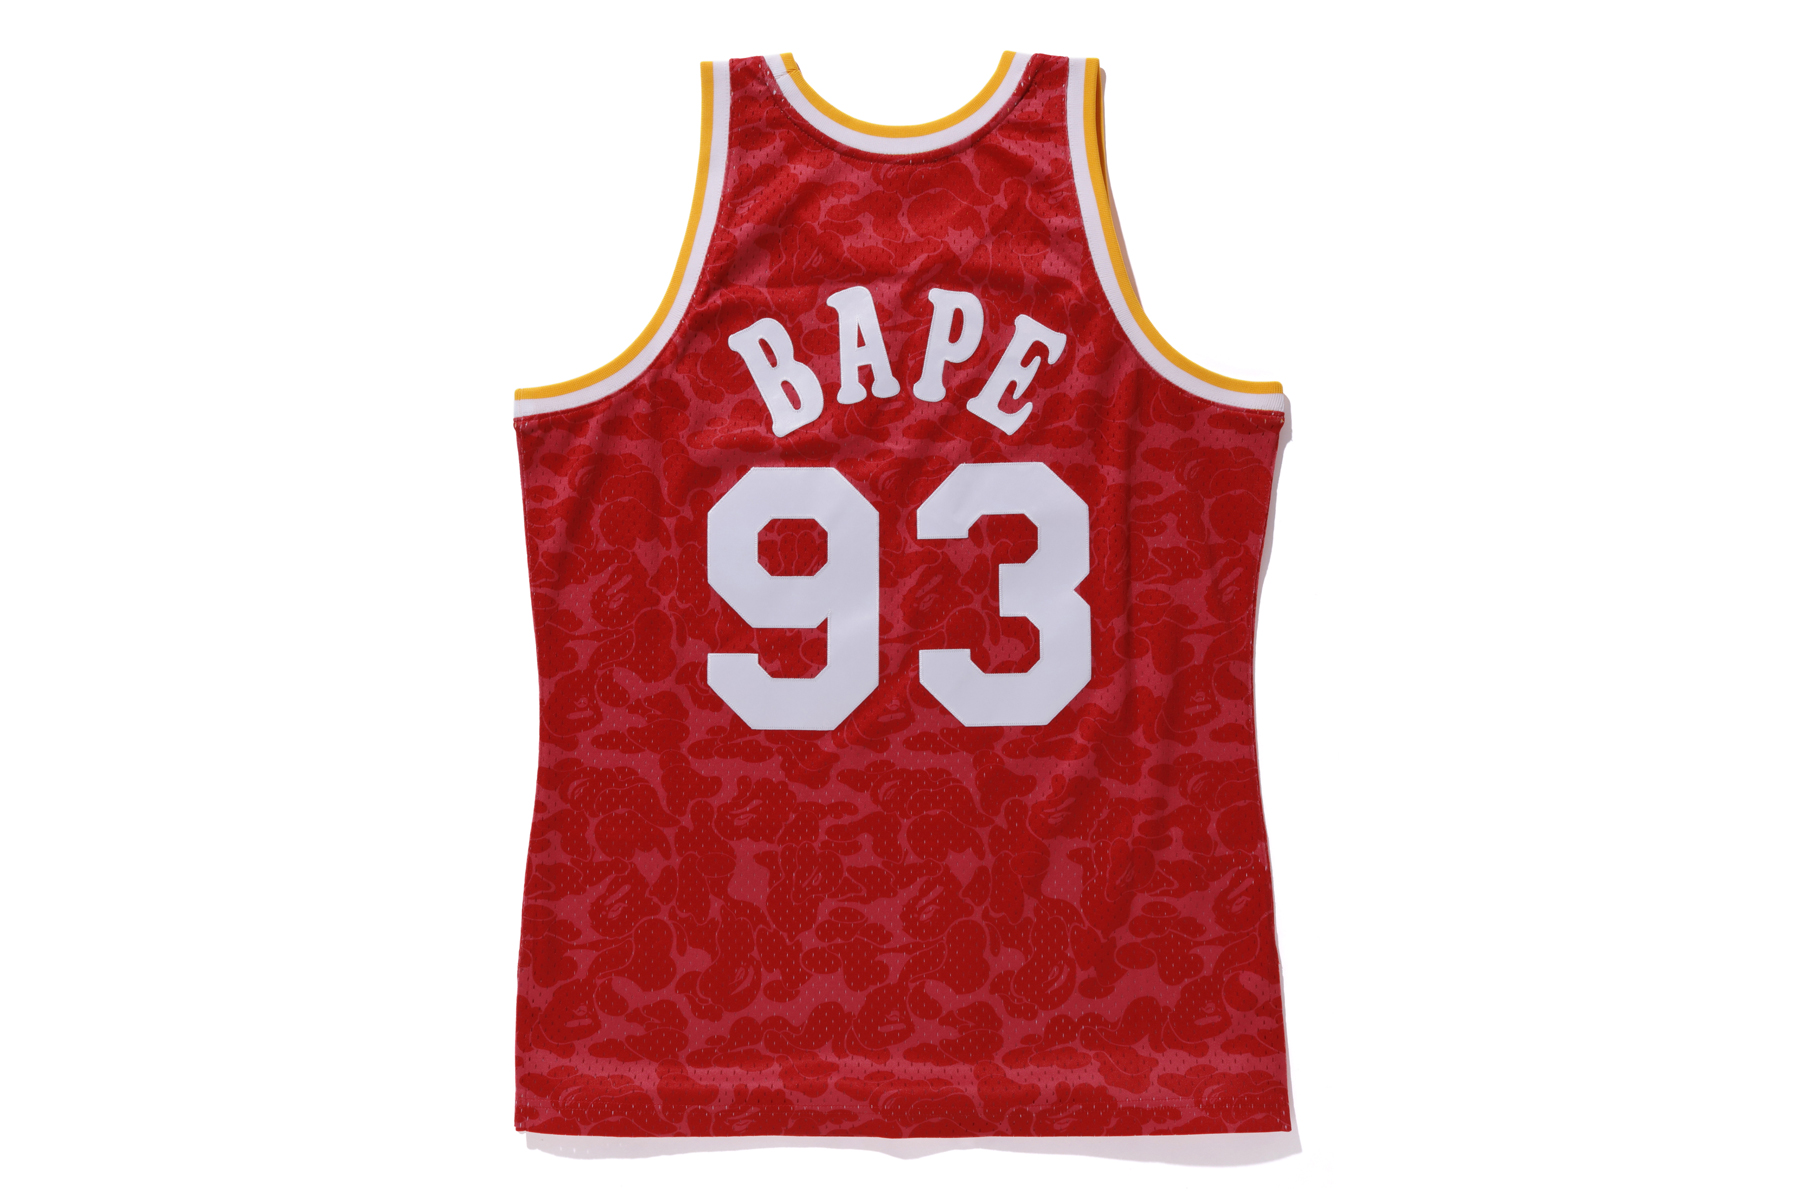 BAPE x Mitchell & Ness NBA Jerseys Release Price, Drops